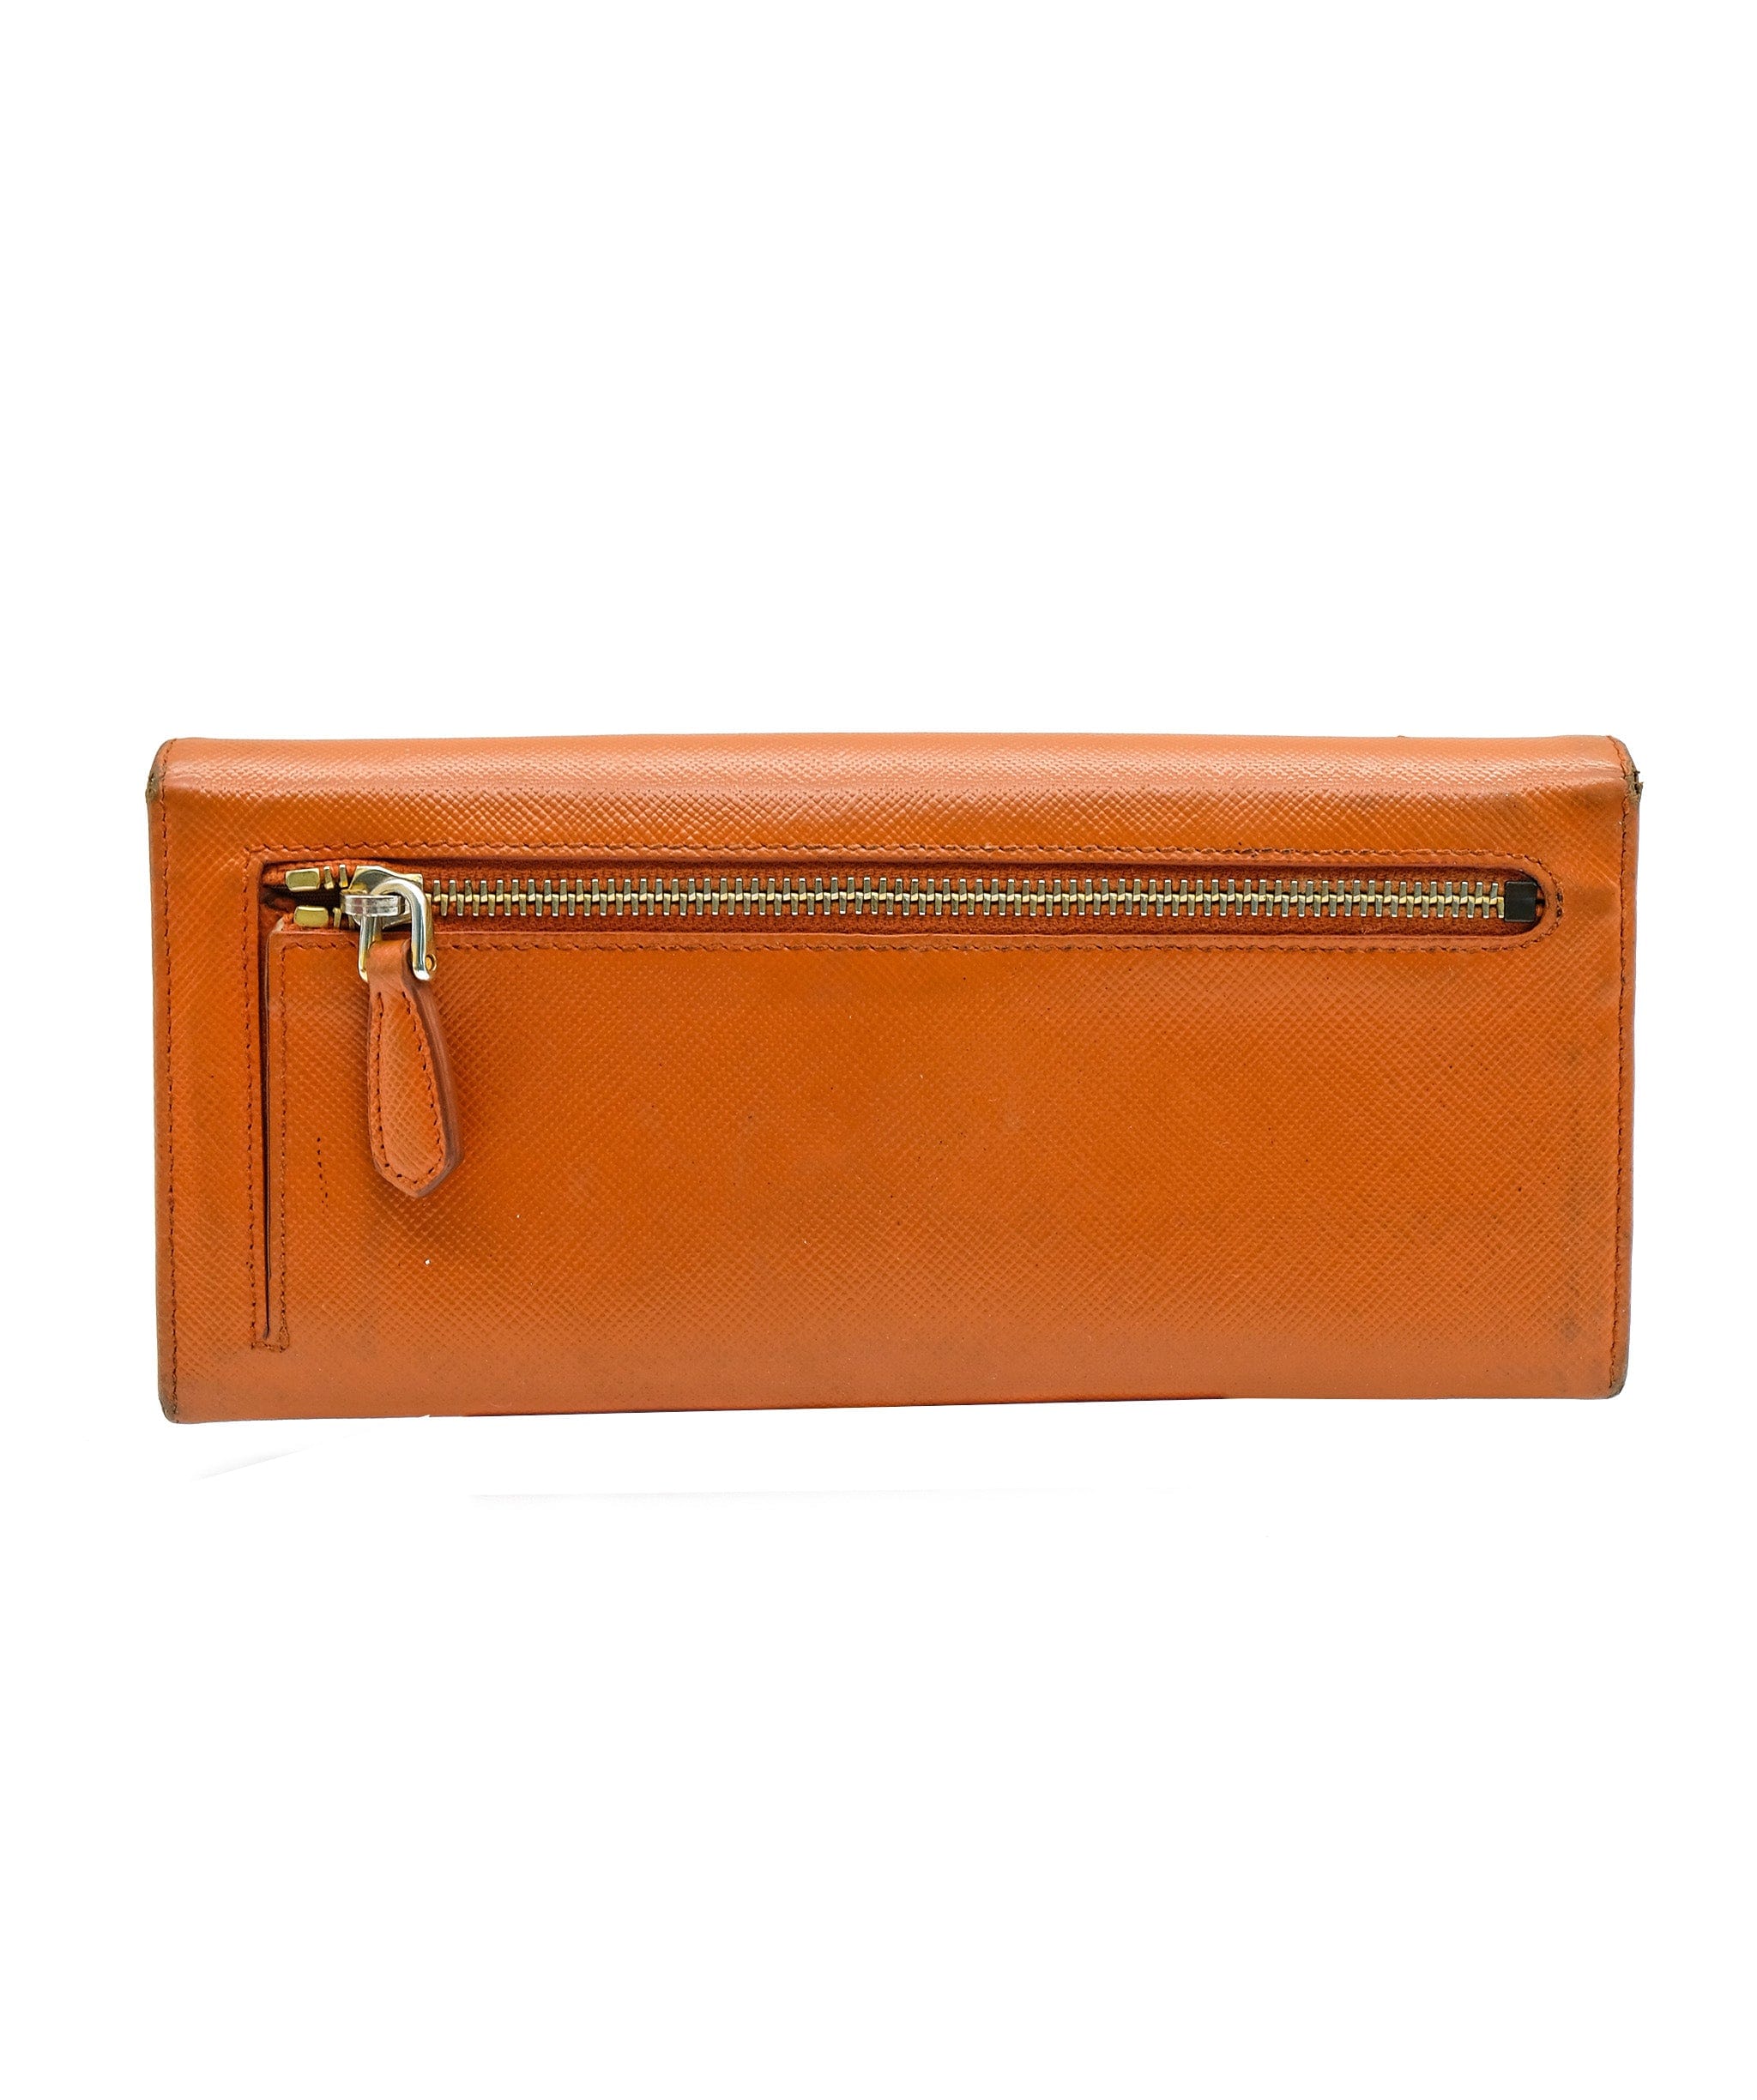 Prada Prada Saffiano Long Wallet Orange RJC1602